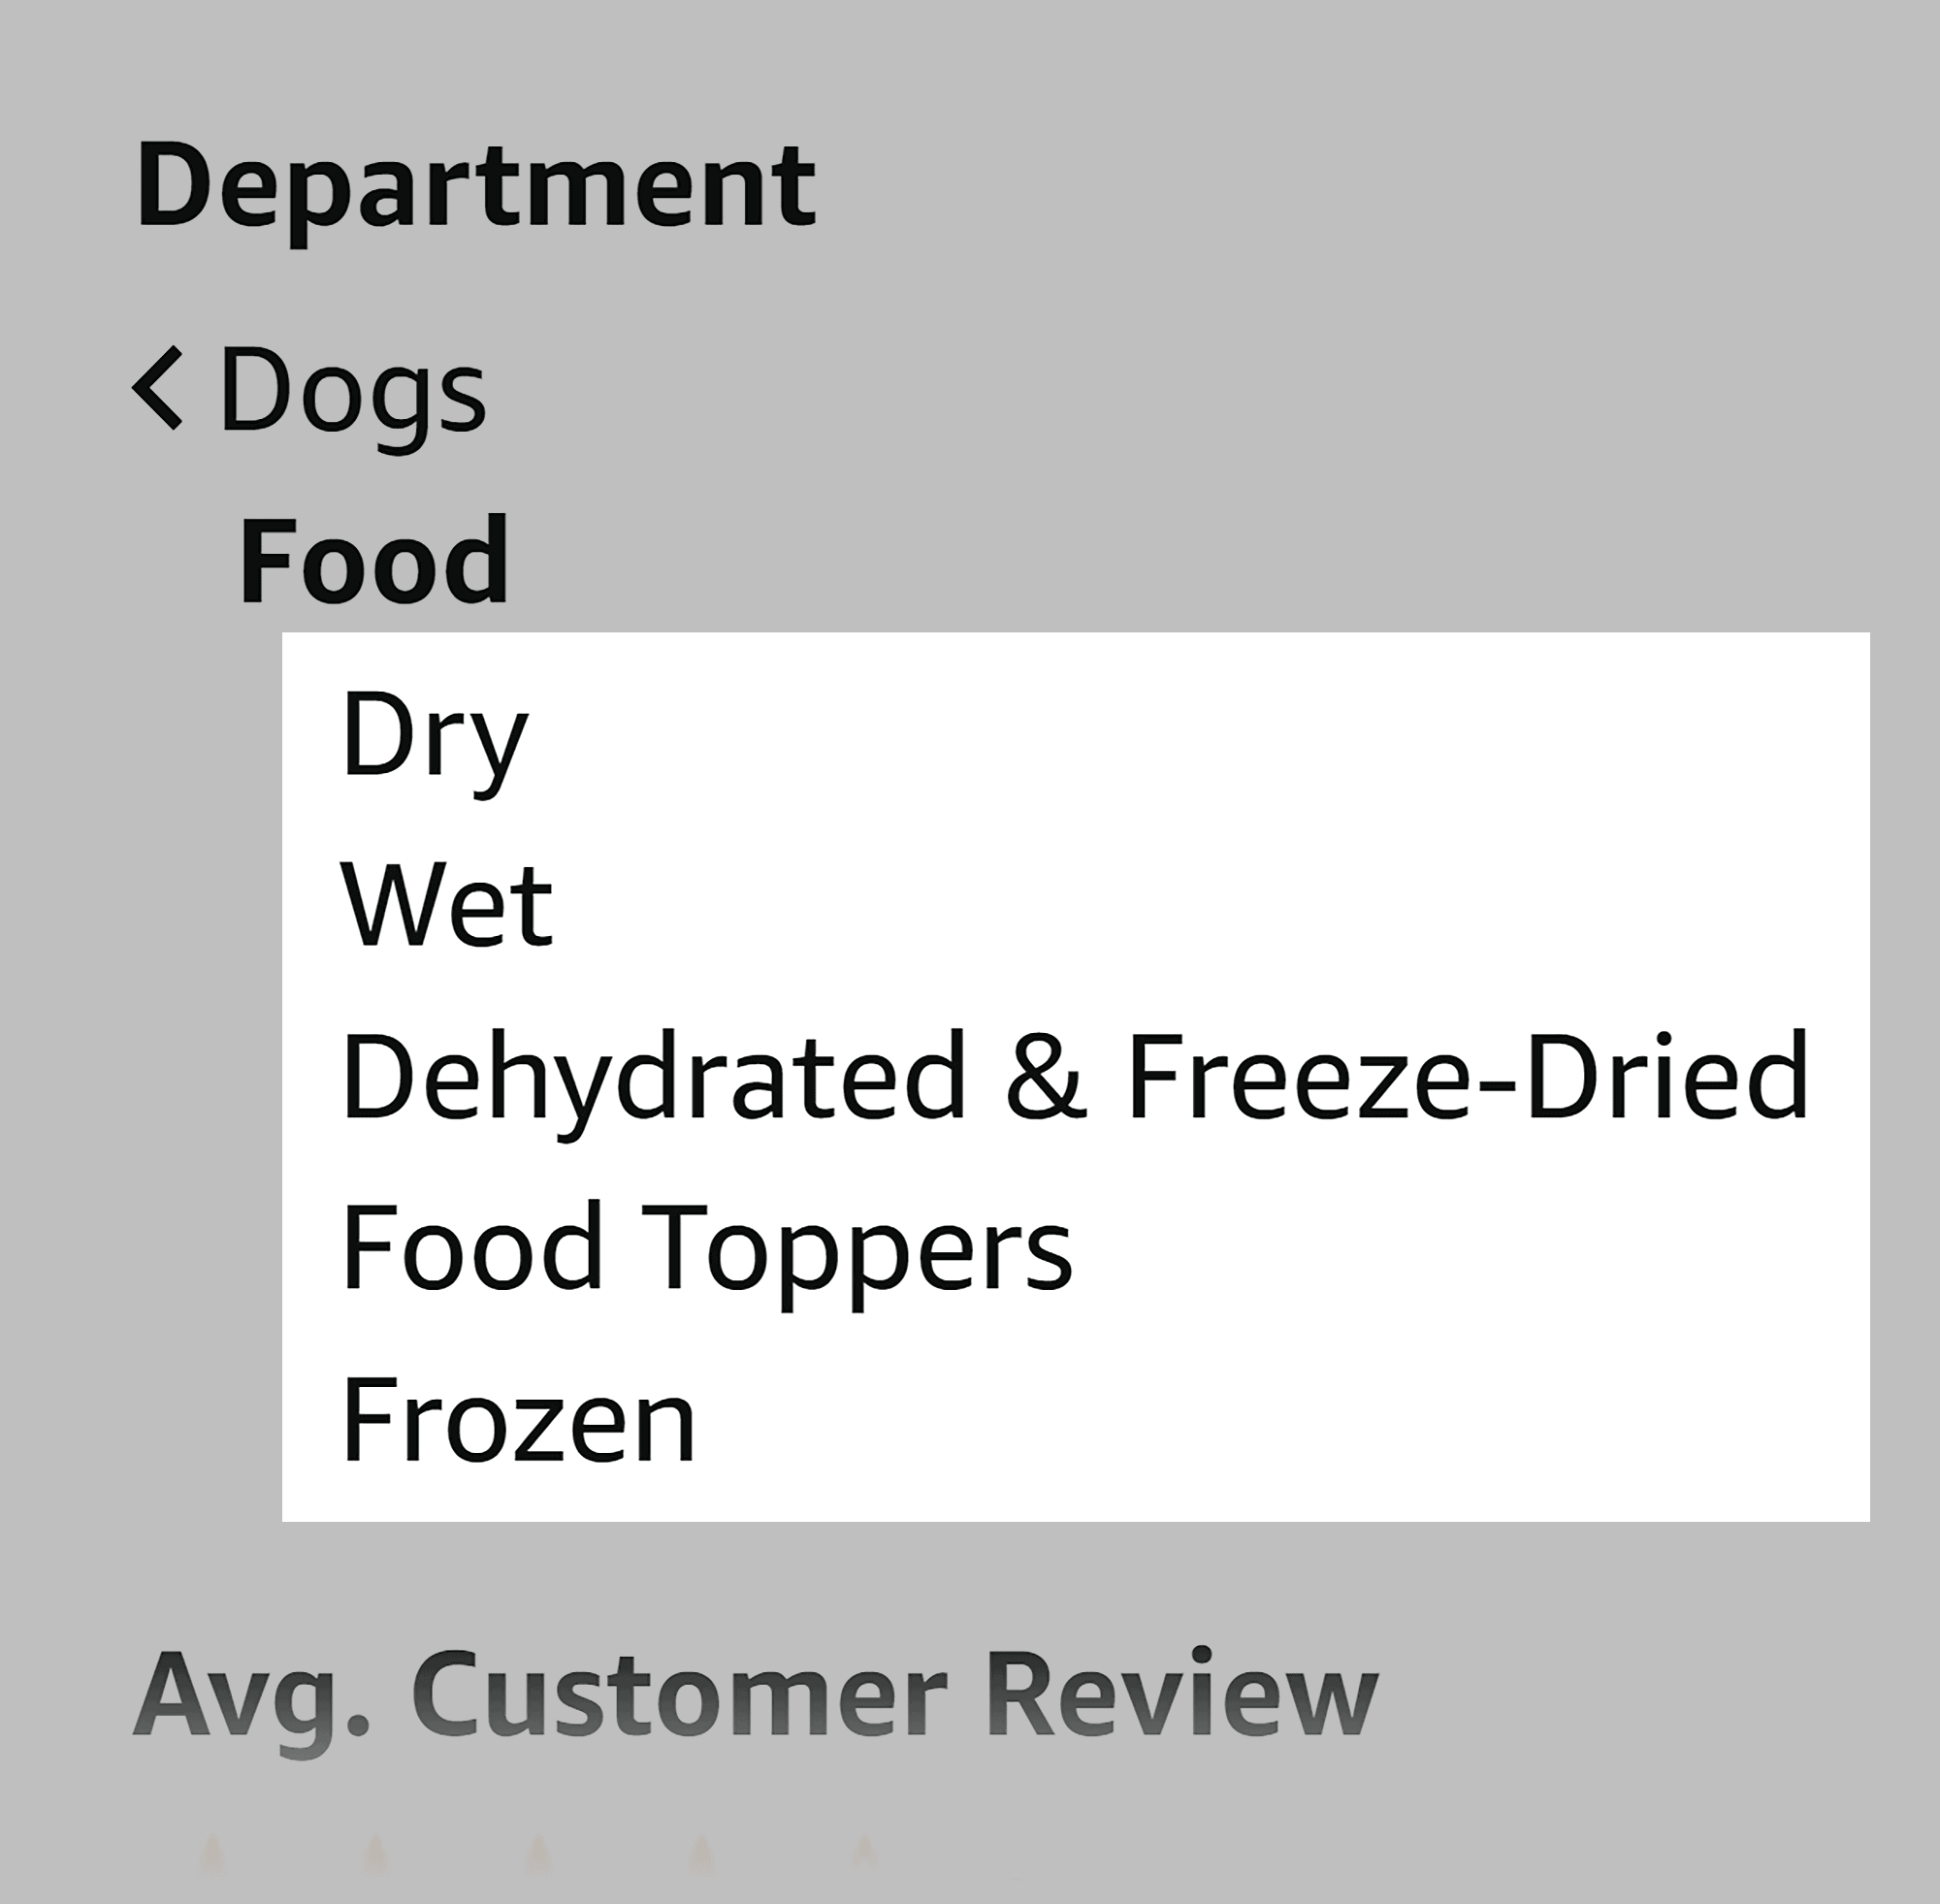 Amazon – Dogs department – Food keywords